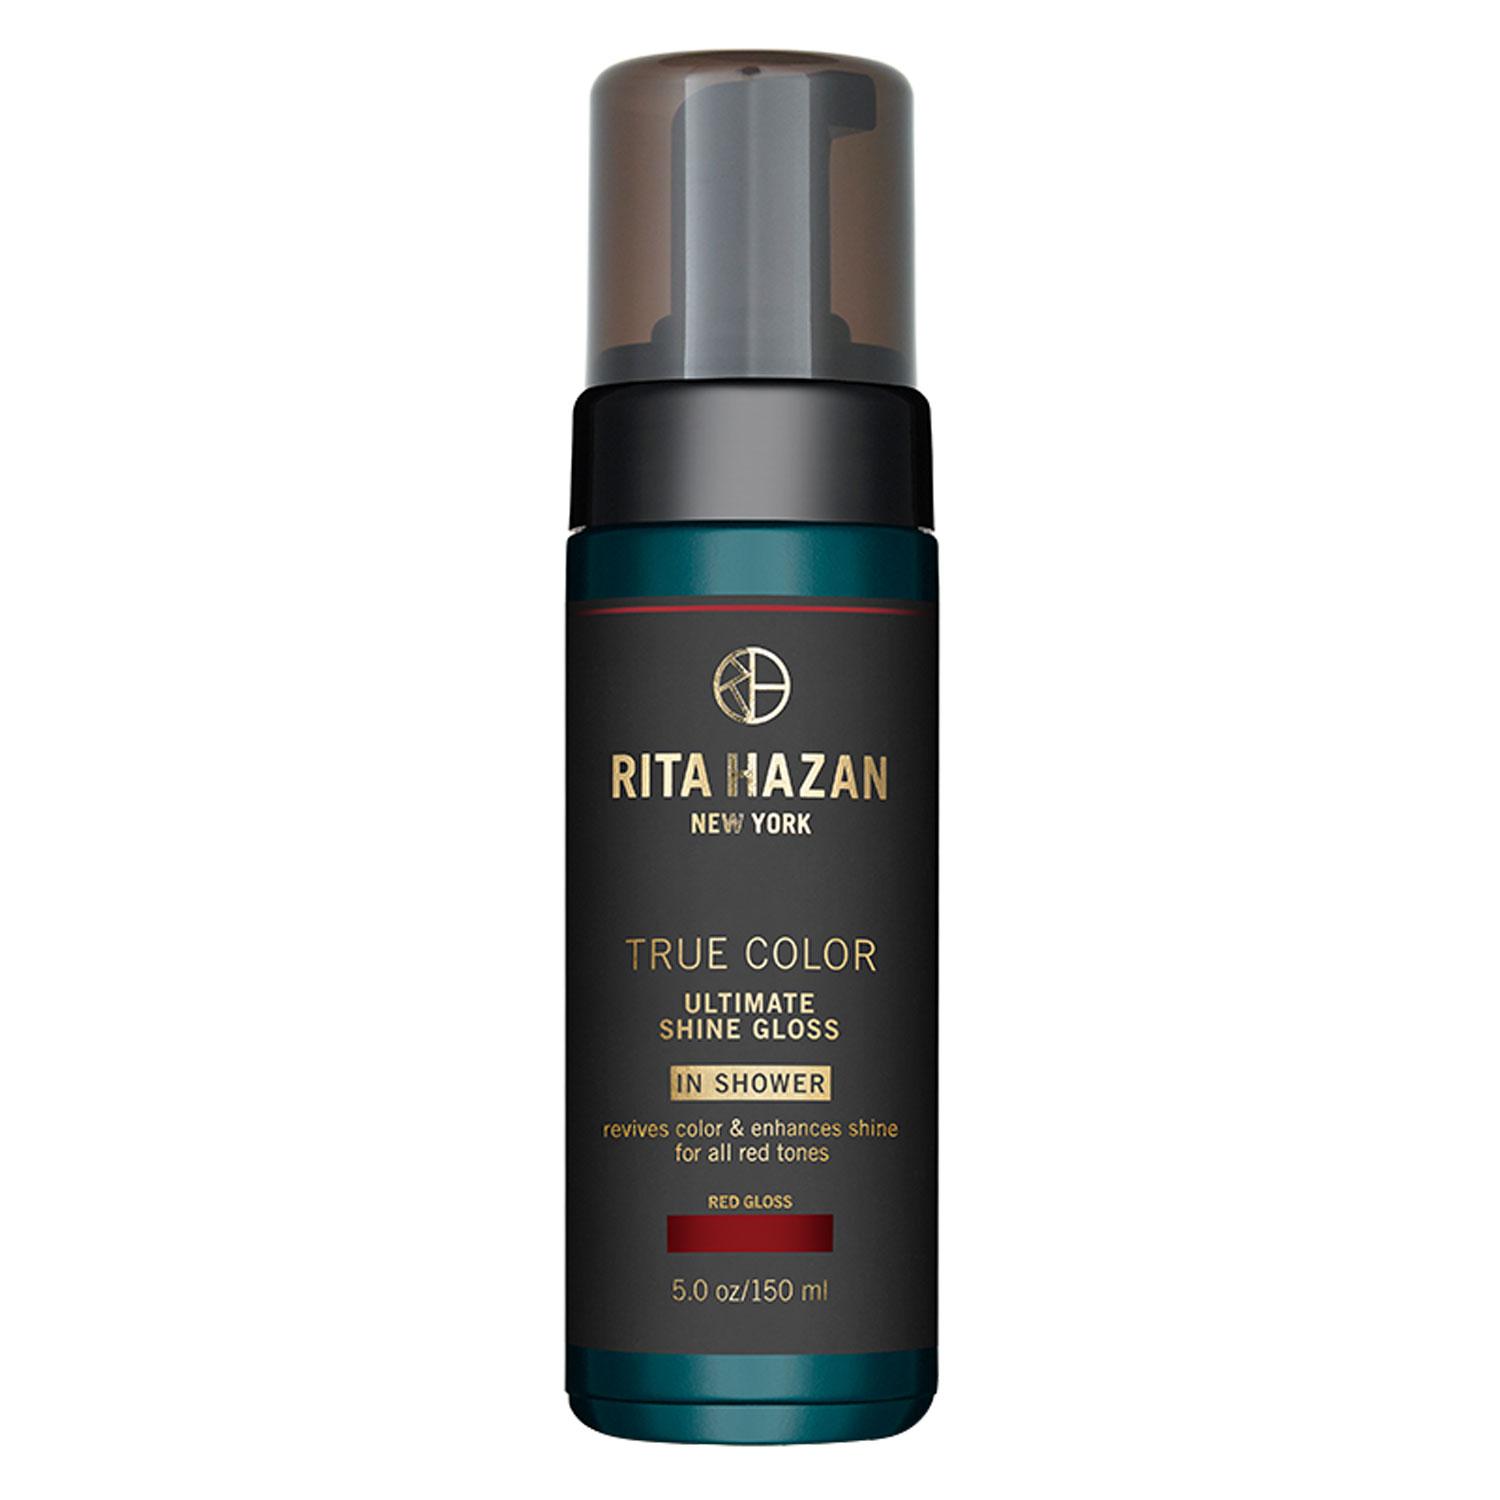 Rita Hazan New York - True Color Ultimate Shine Gloss Red